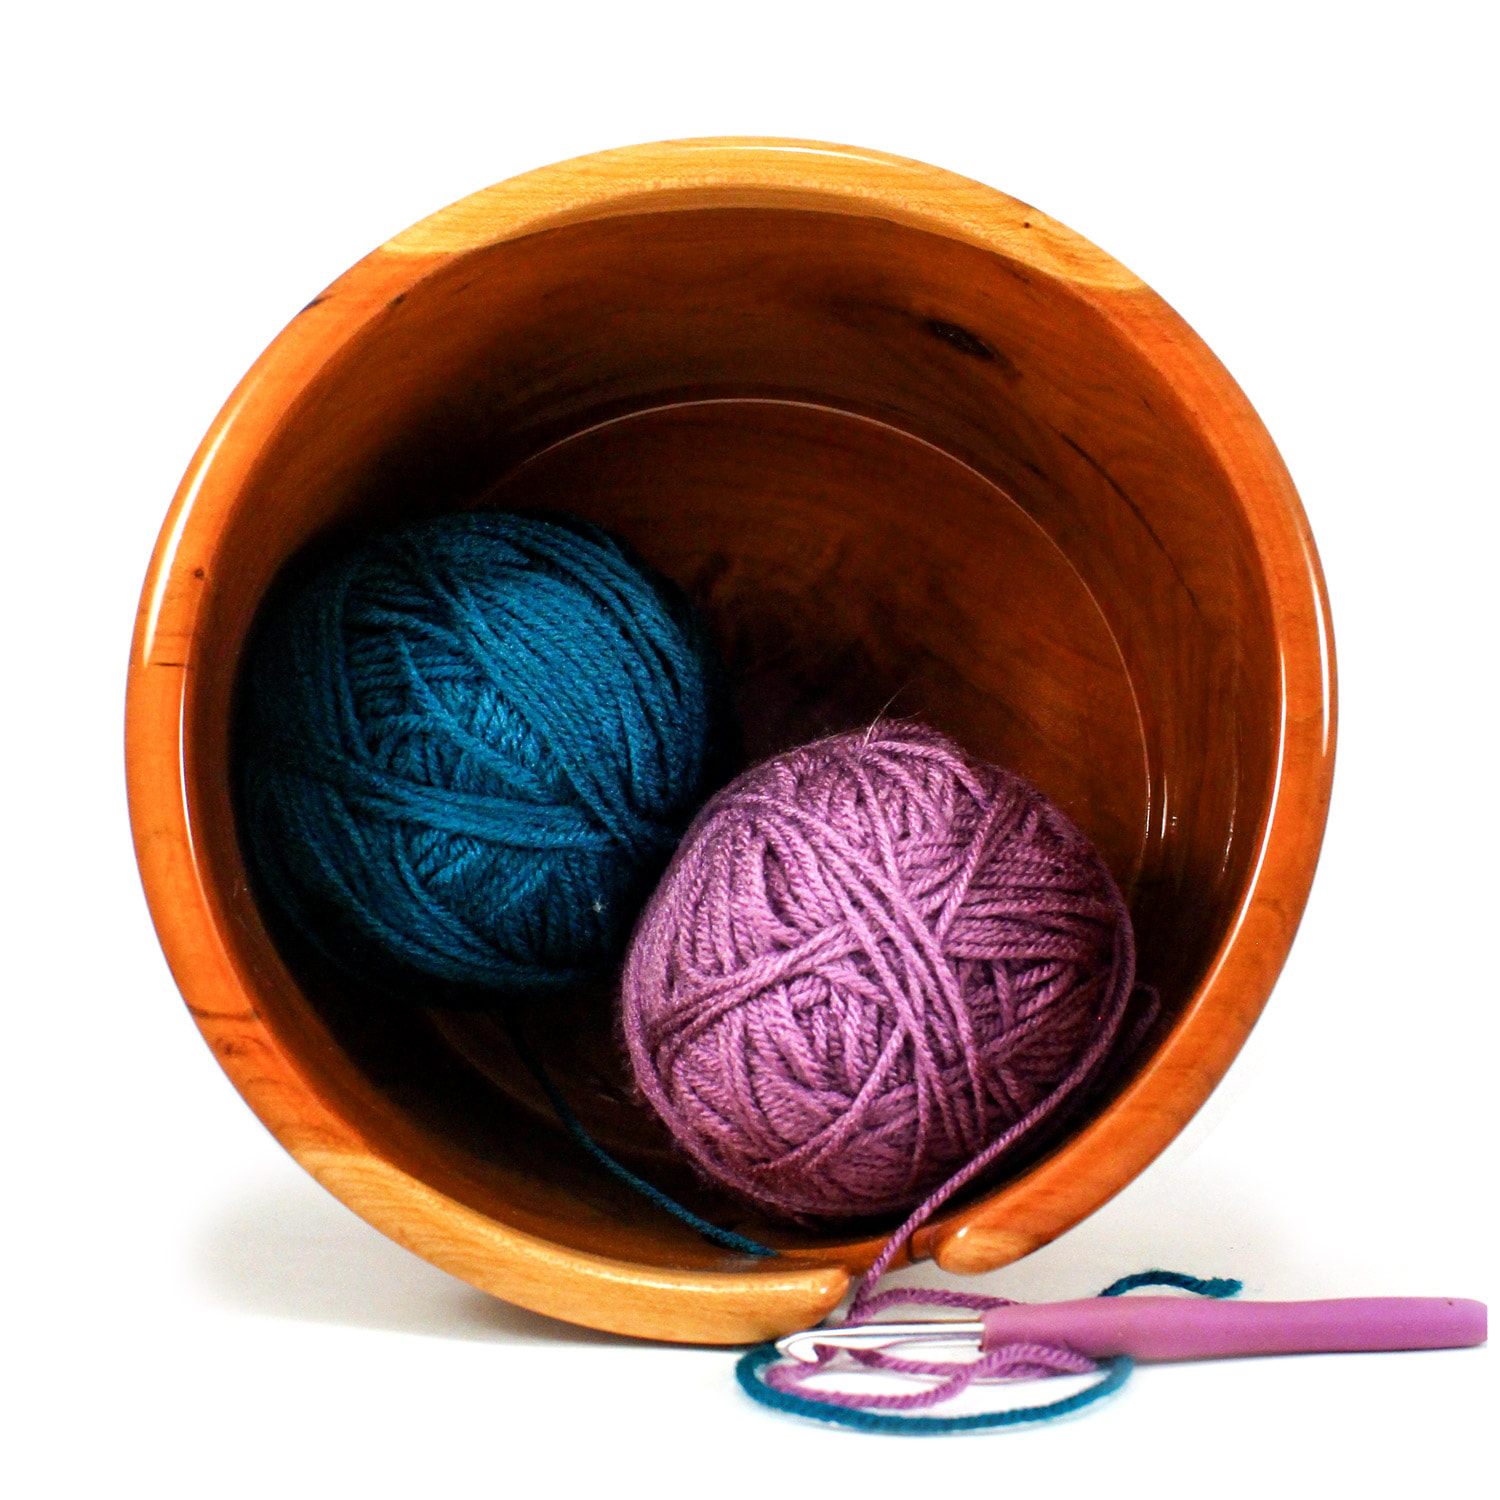 2-xxl-cherry-yarn-bowl-993.jpg?w=672